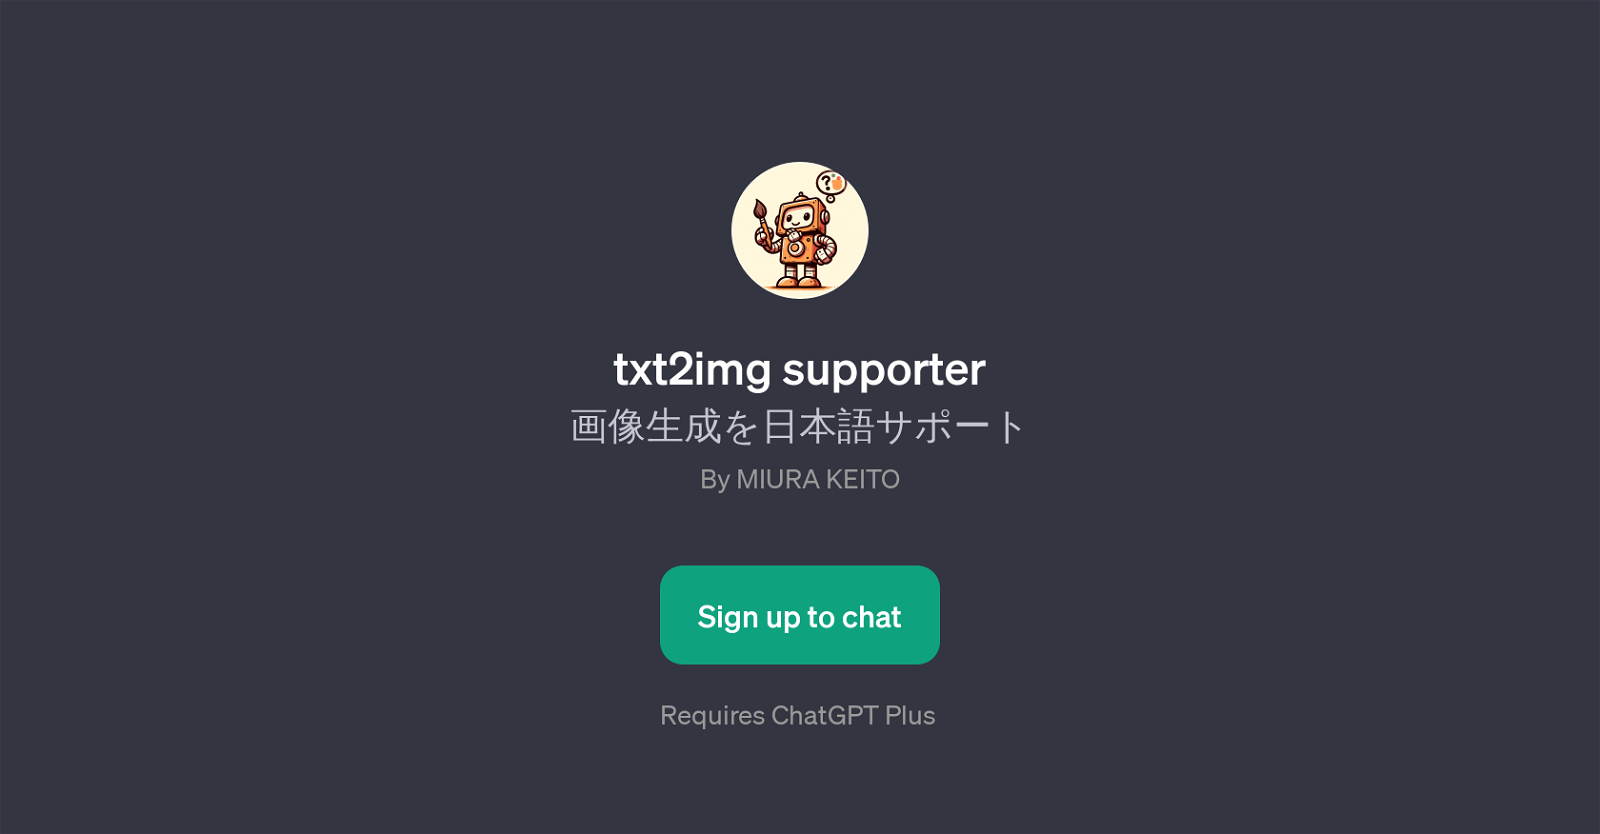 txt2img supporter website